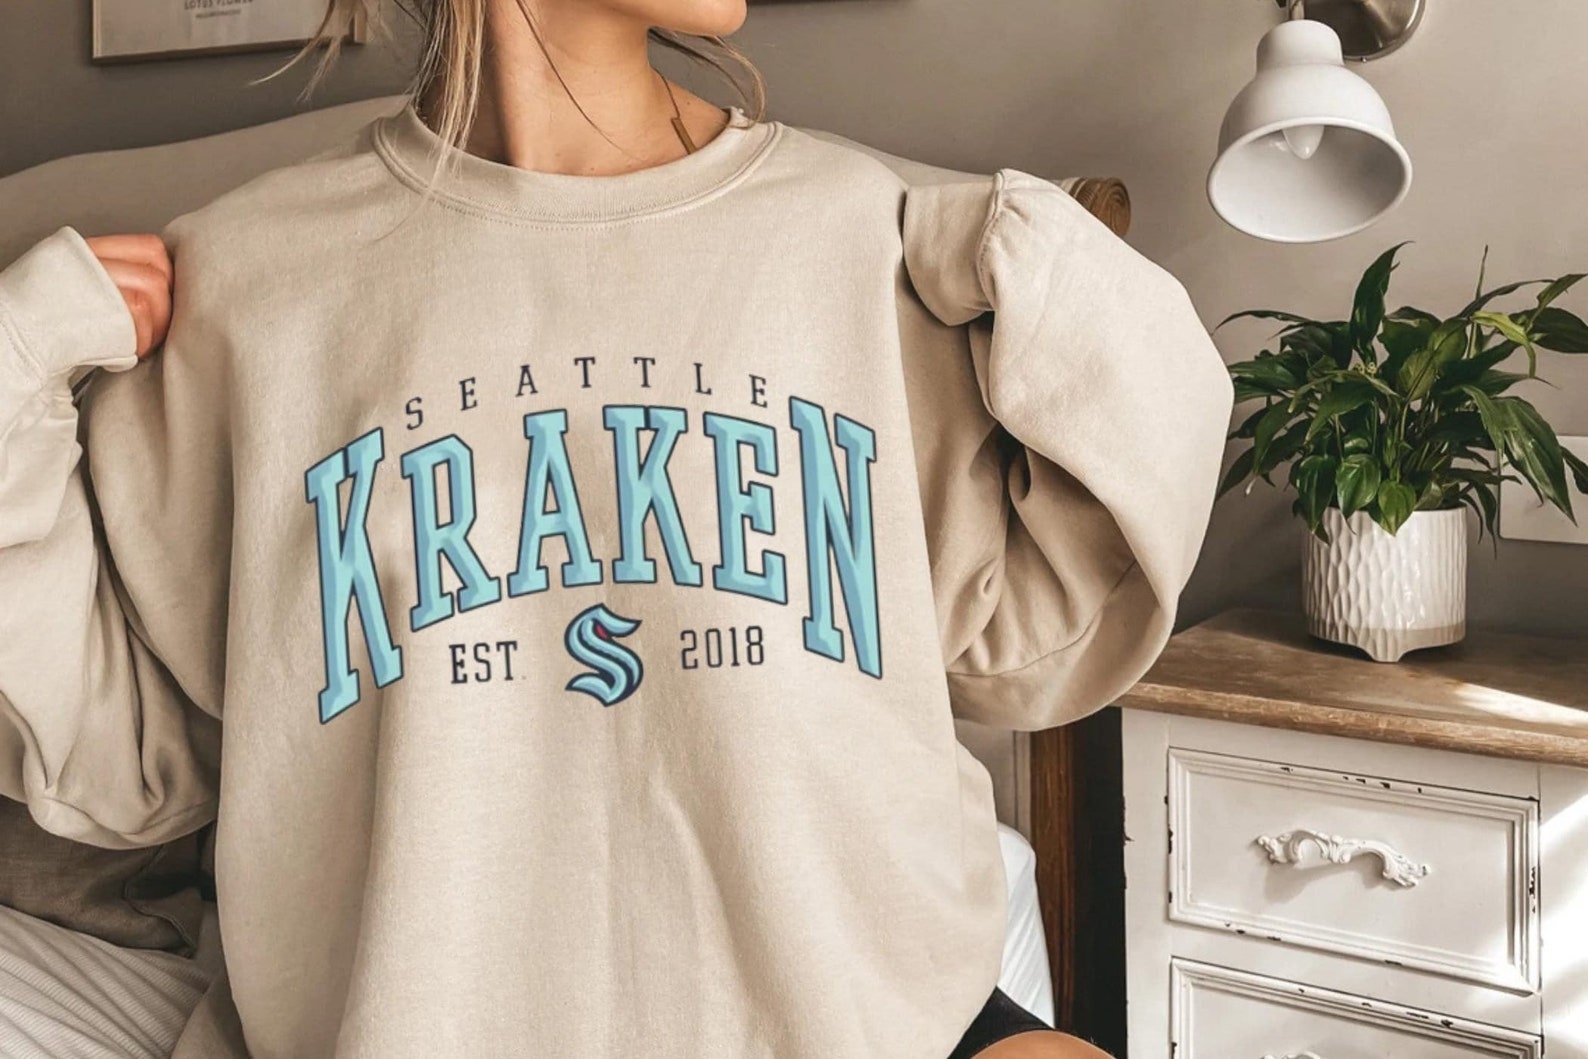 The best design Seattle kraken Seattle kraken 70 shirt, hoodie, sweater,  long sleeve and tank top